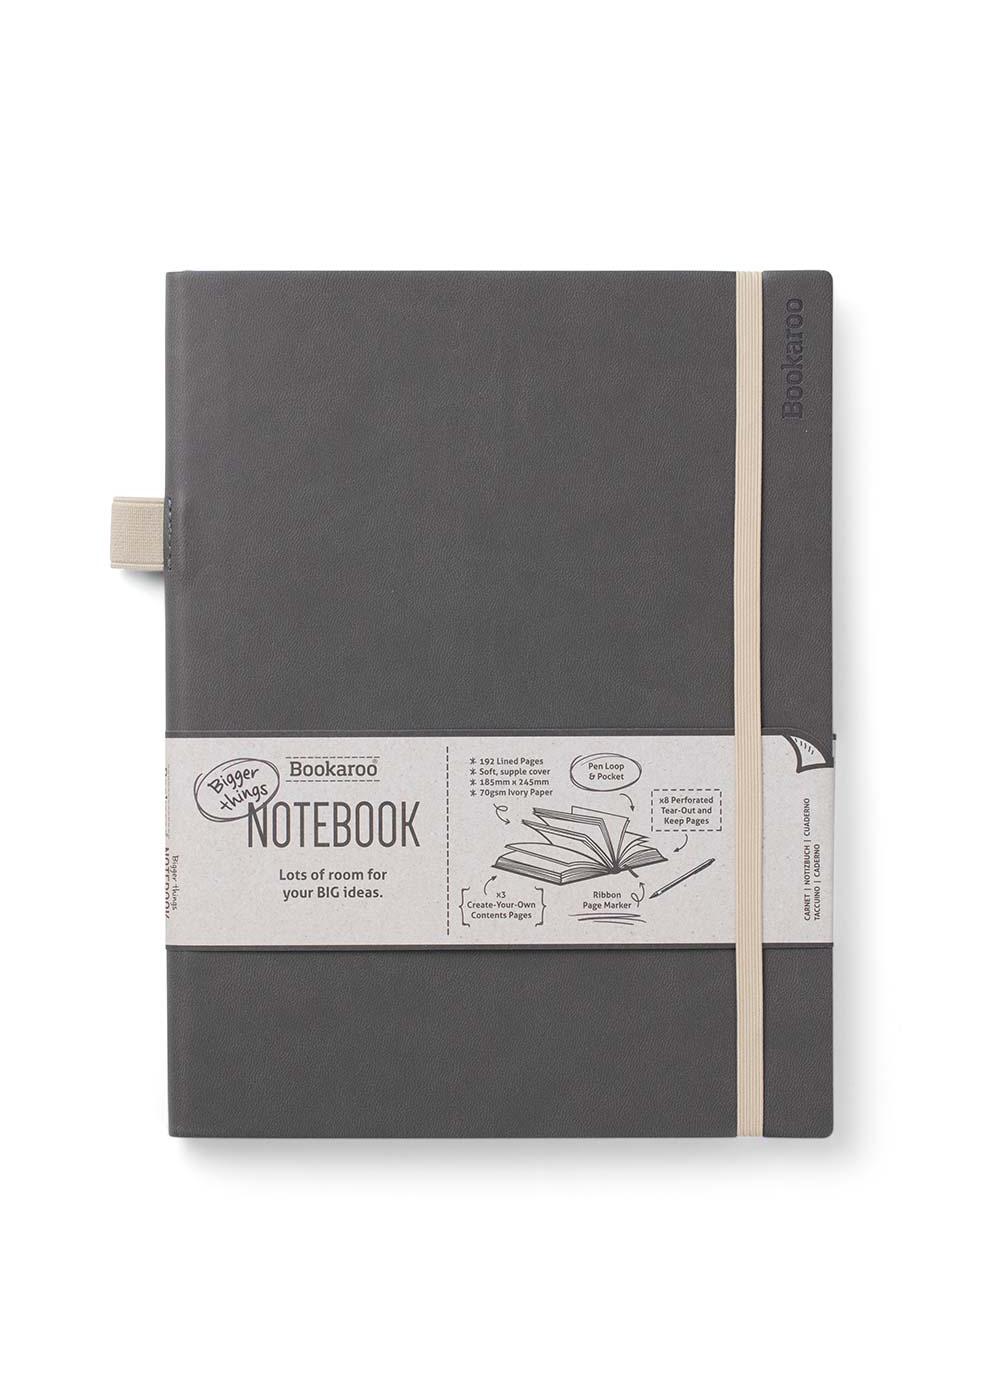 Bookaroo Bigger Things Notebook - Charcoal; image 1 of 2